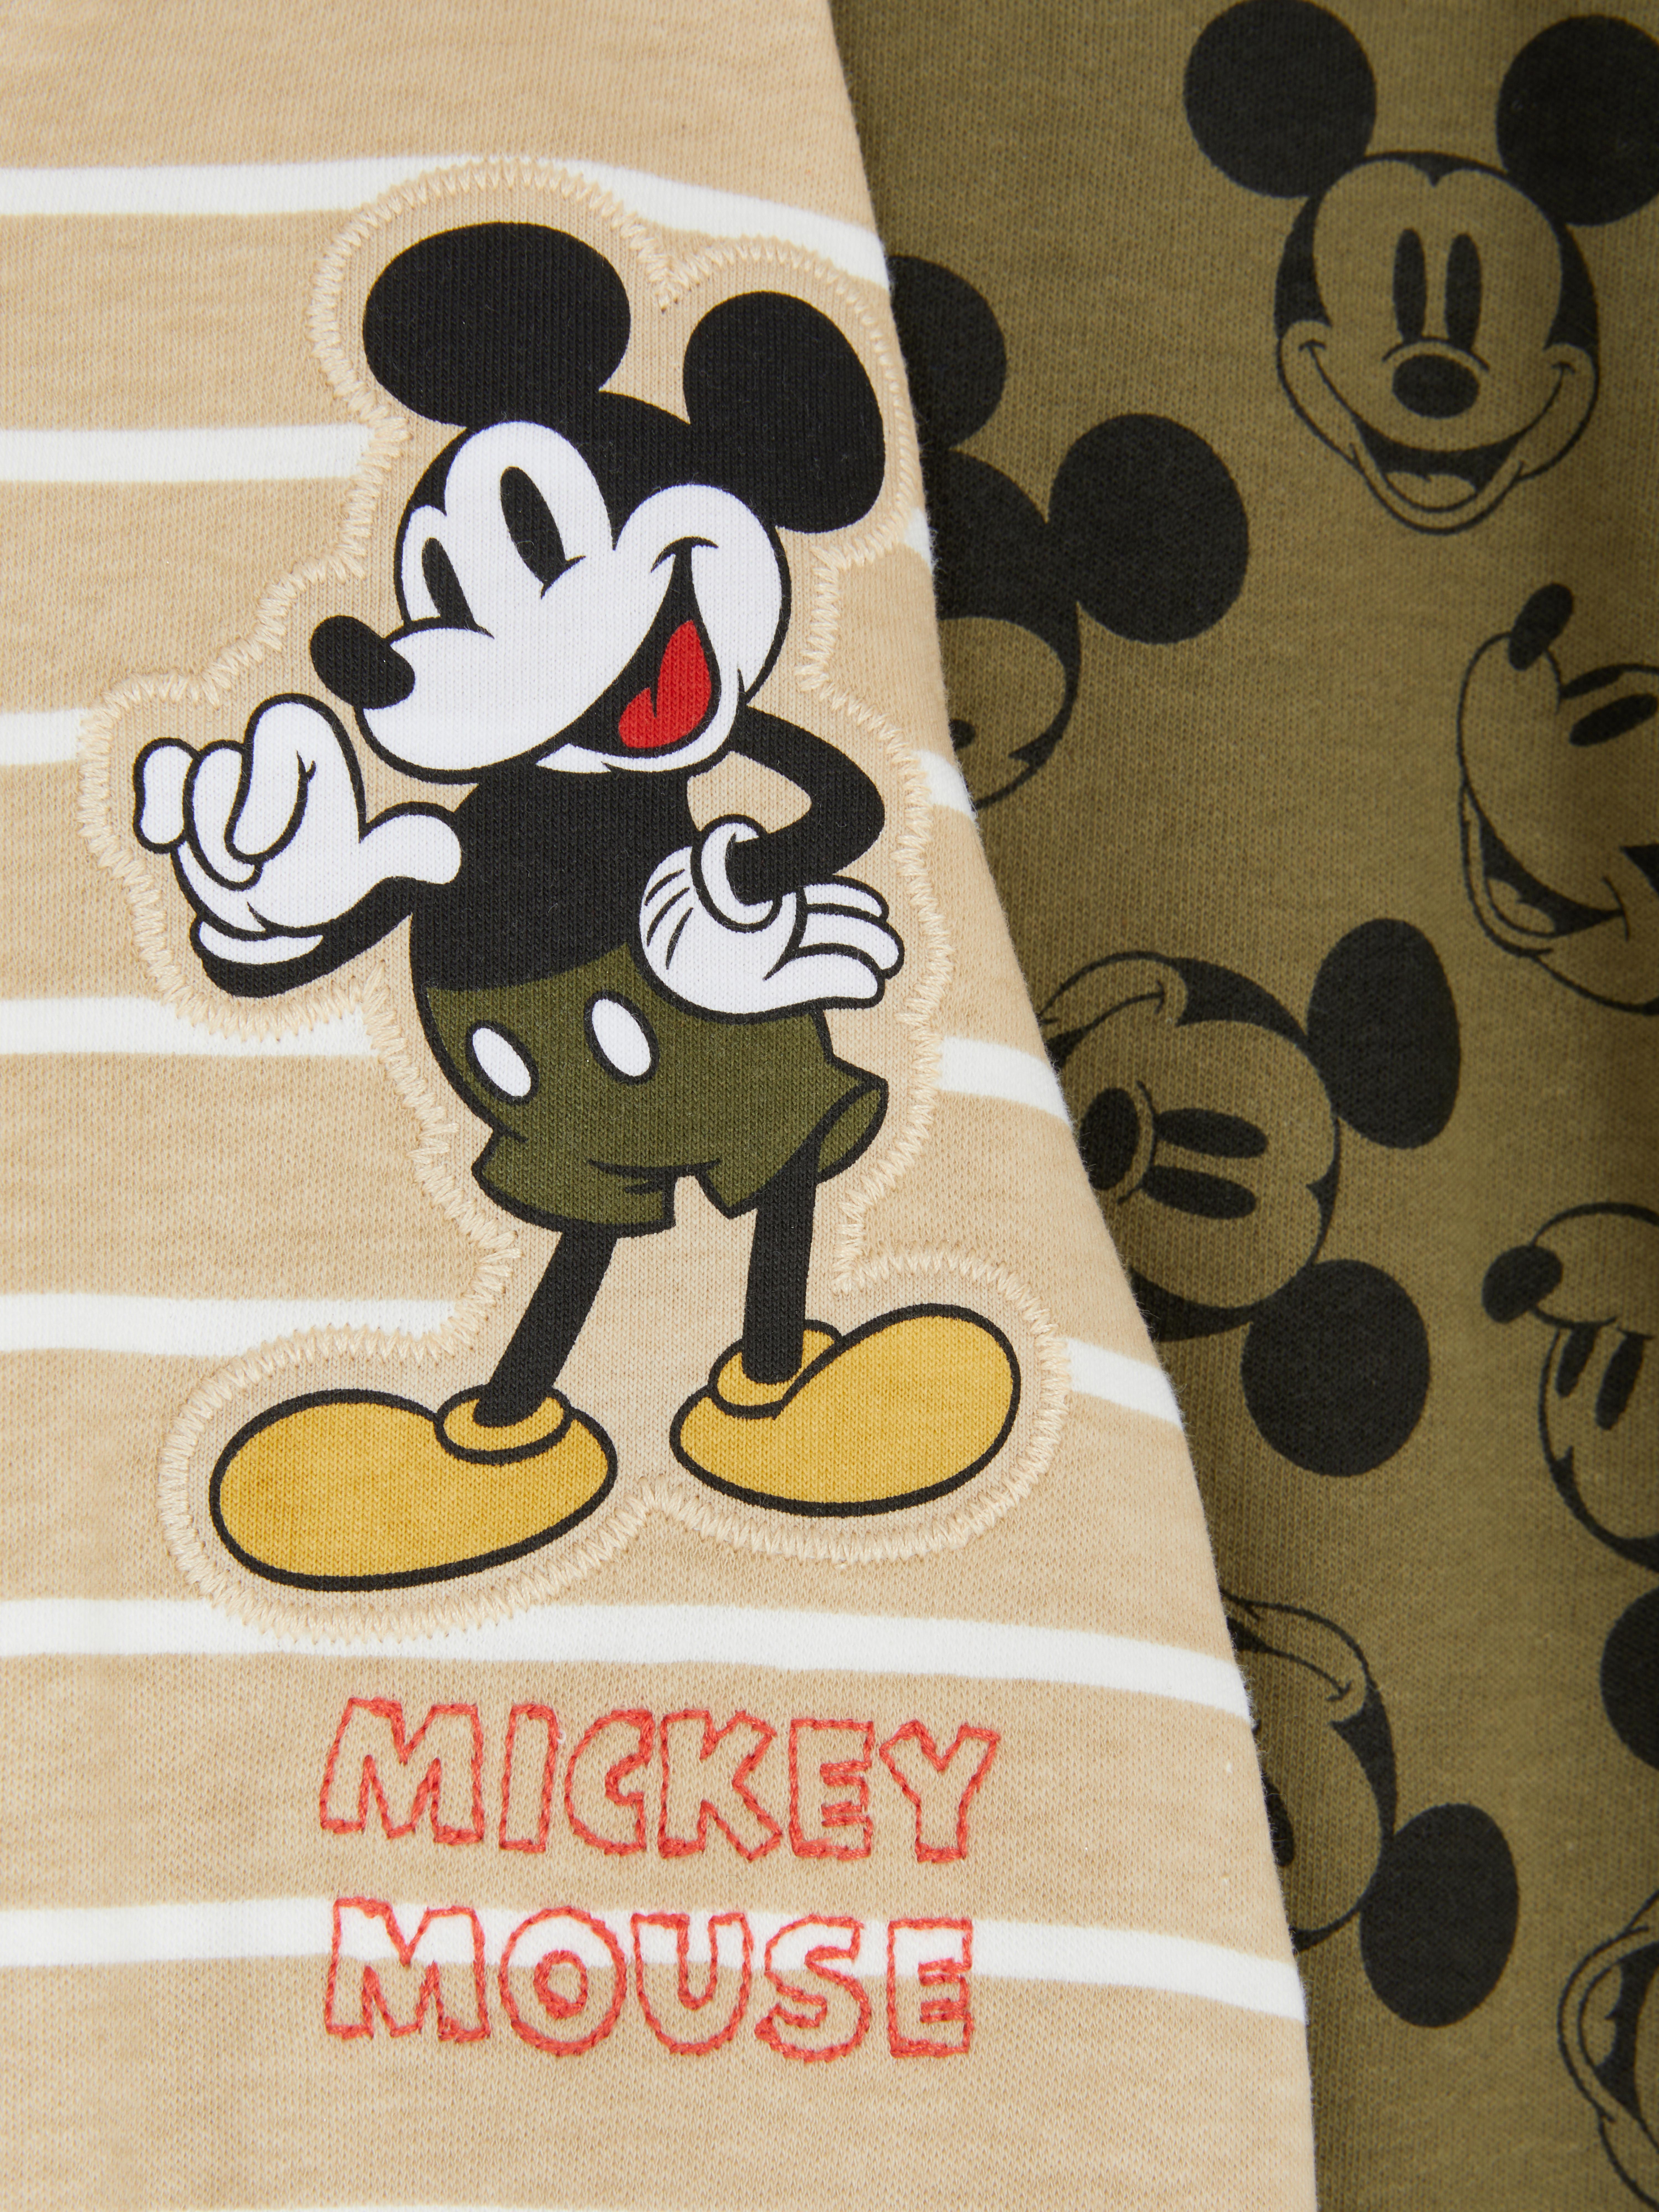 2pk Disney’s Mickey Mouse Sleepsuits